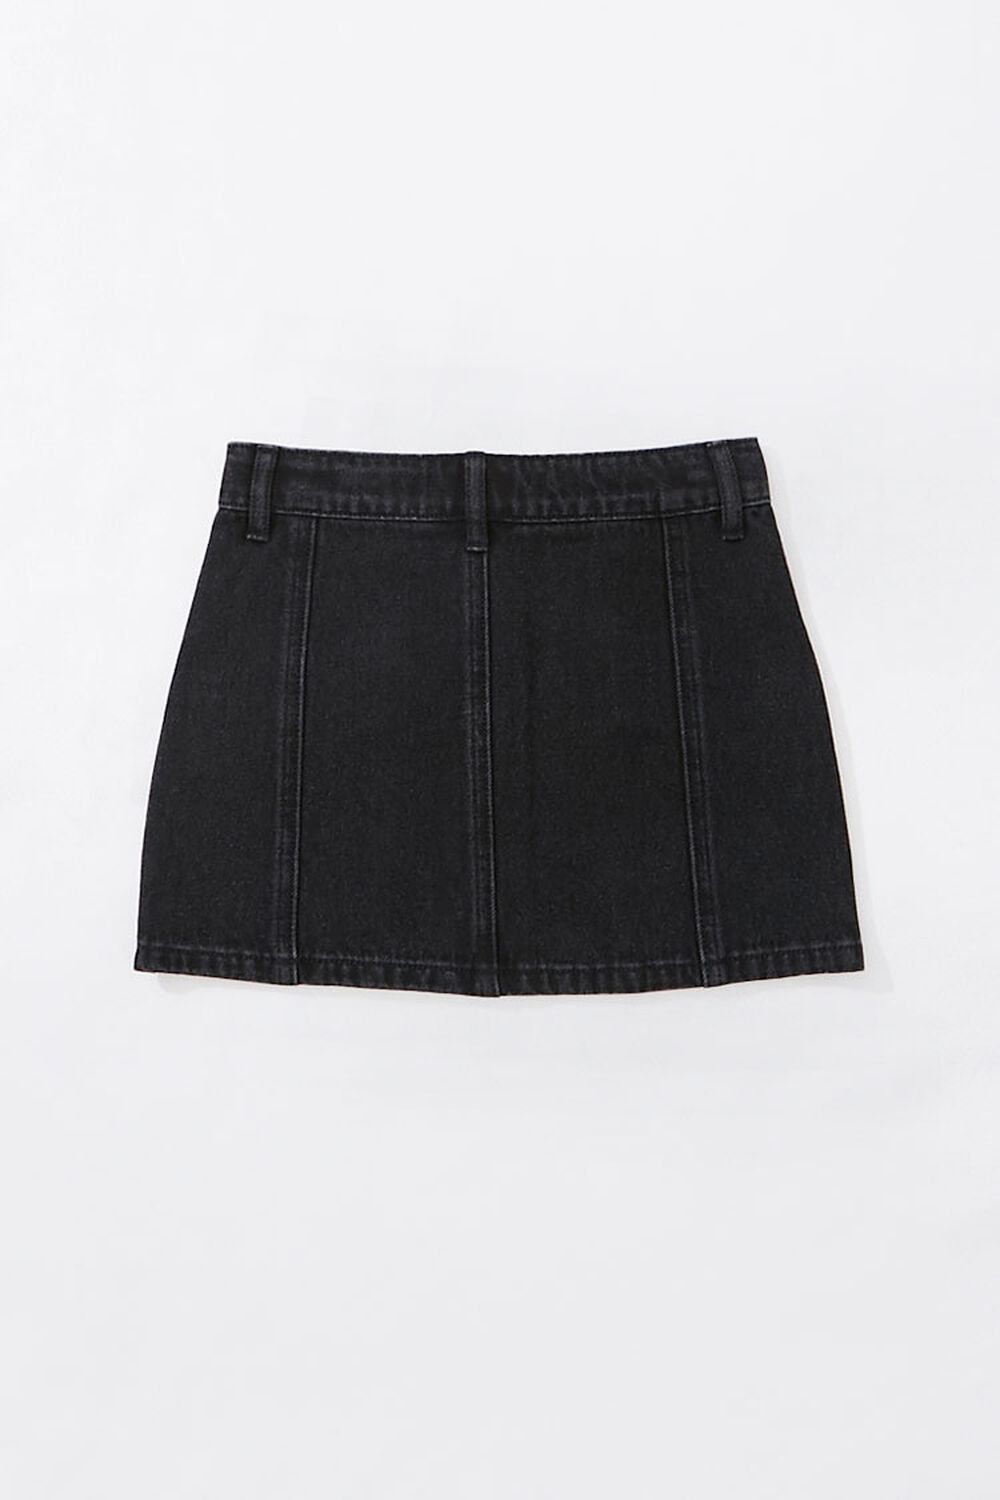 Girls Zip-Up Denim Skirt (Kids), image 2